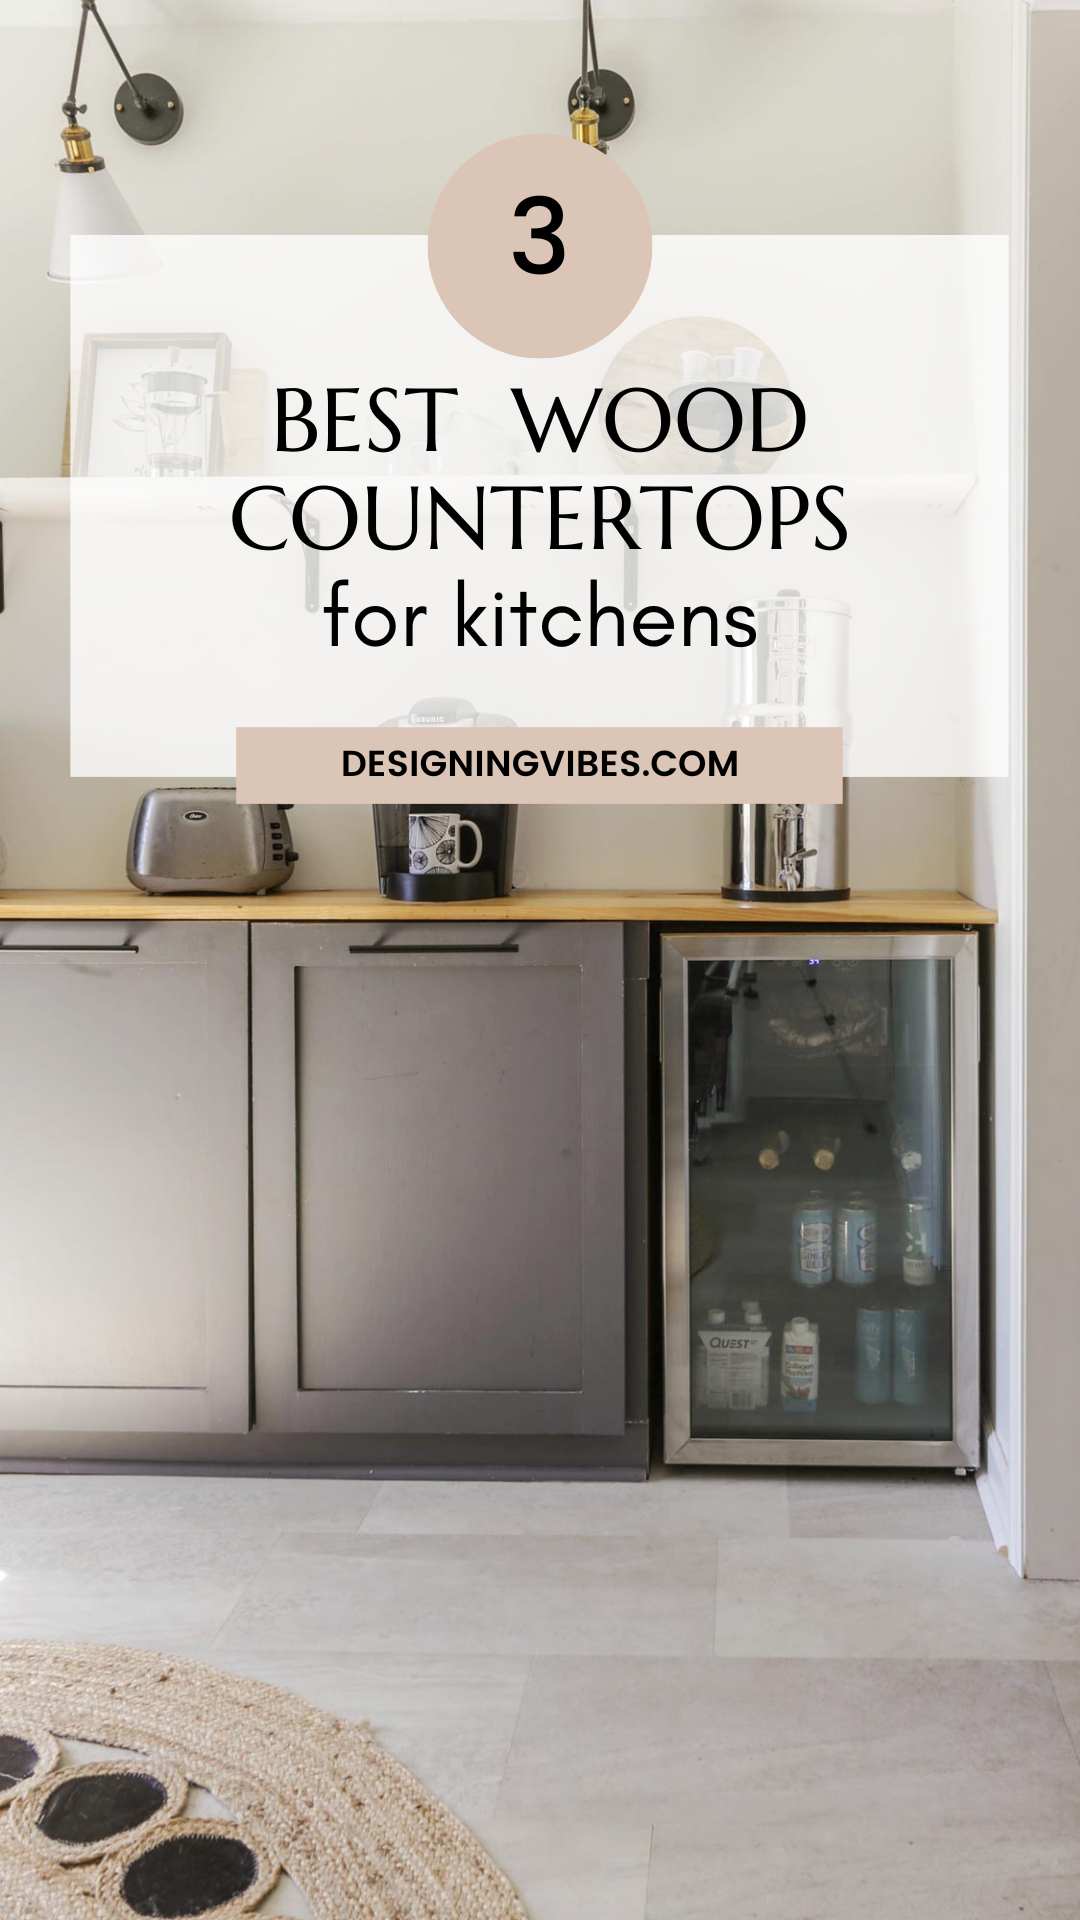 Top Three Kitchen Countertops Compared